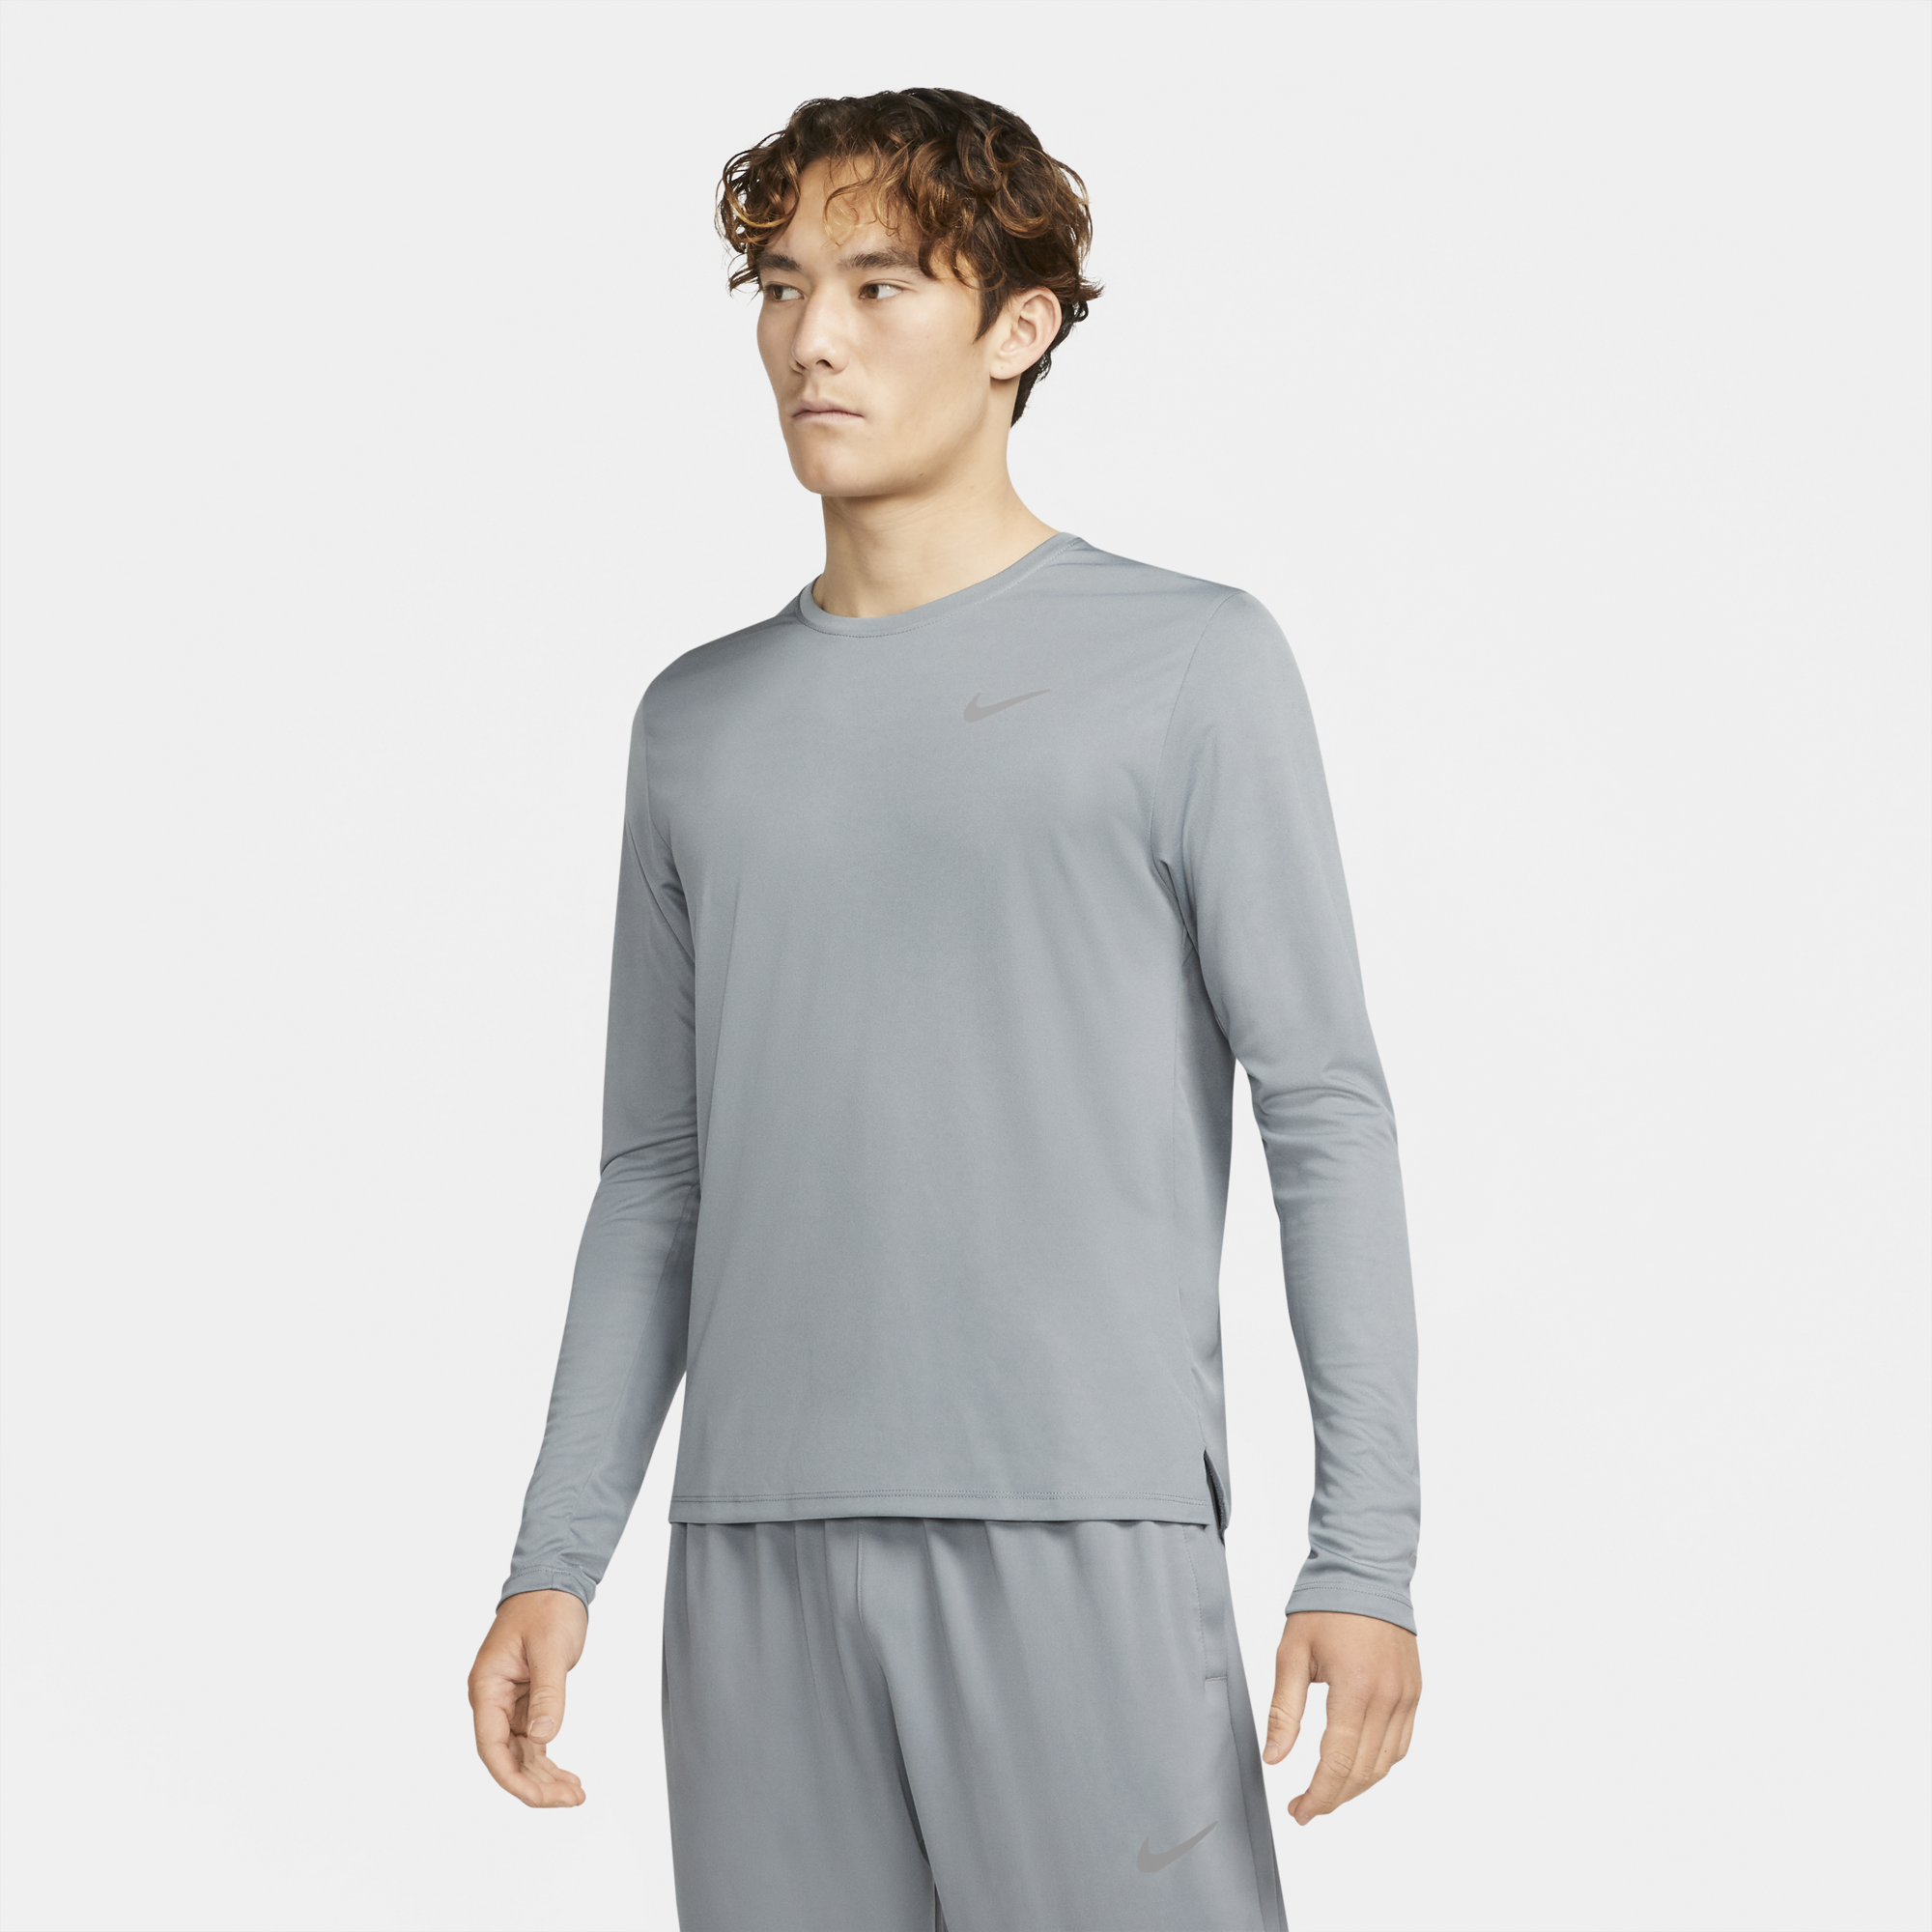 Nike Men's Dri-FIT Miler Long-Sleeve Running Top